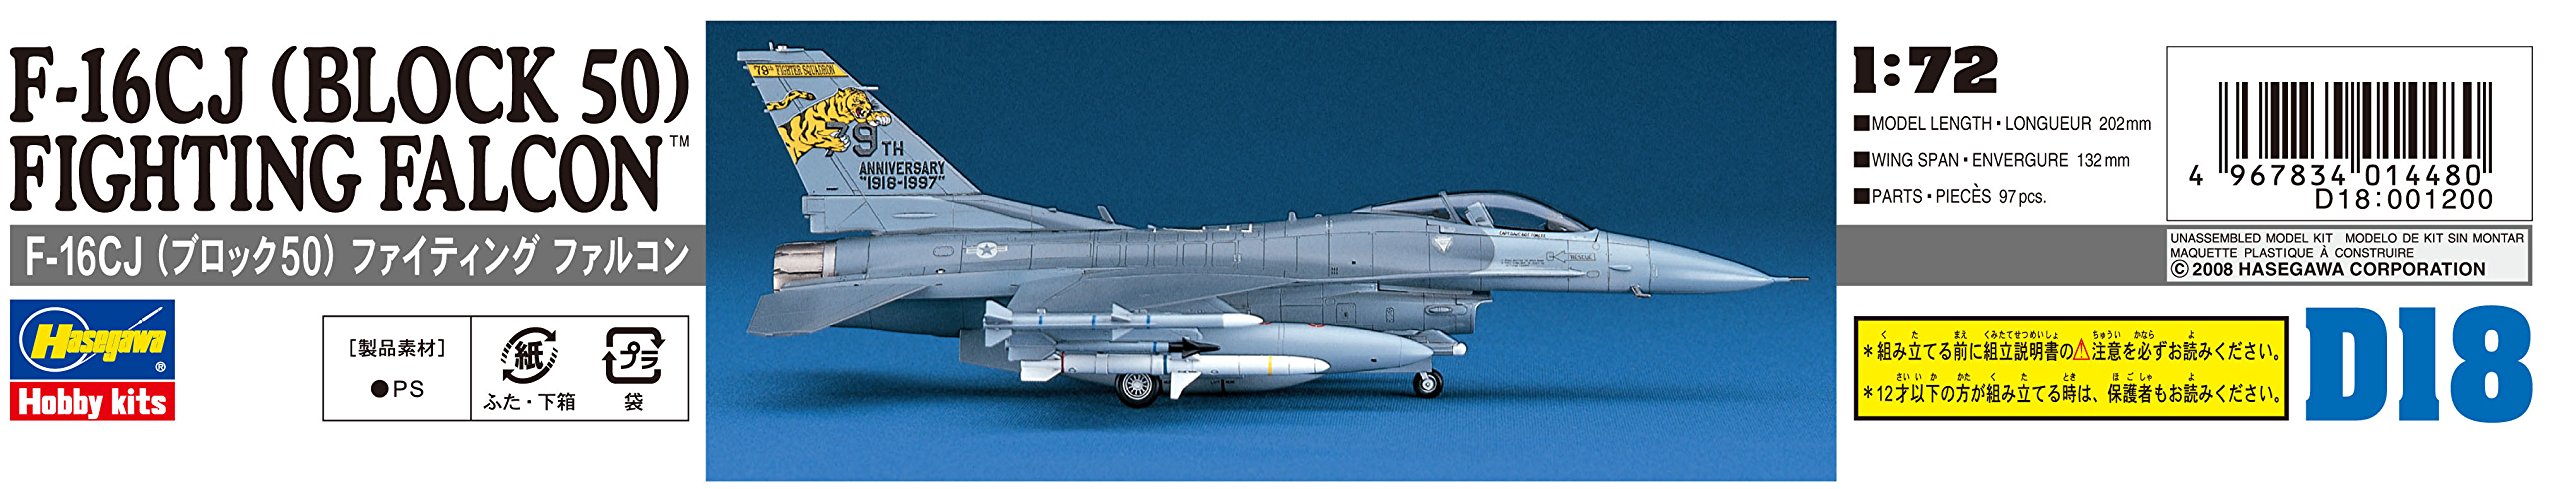 HASEGAWA 1/72 F-16Cj Block 50 Fighting Falcon U.S. Air Force Tactical Figher Plastic Model